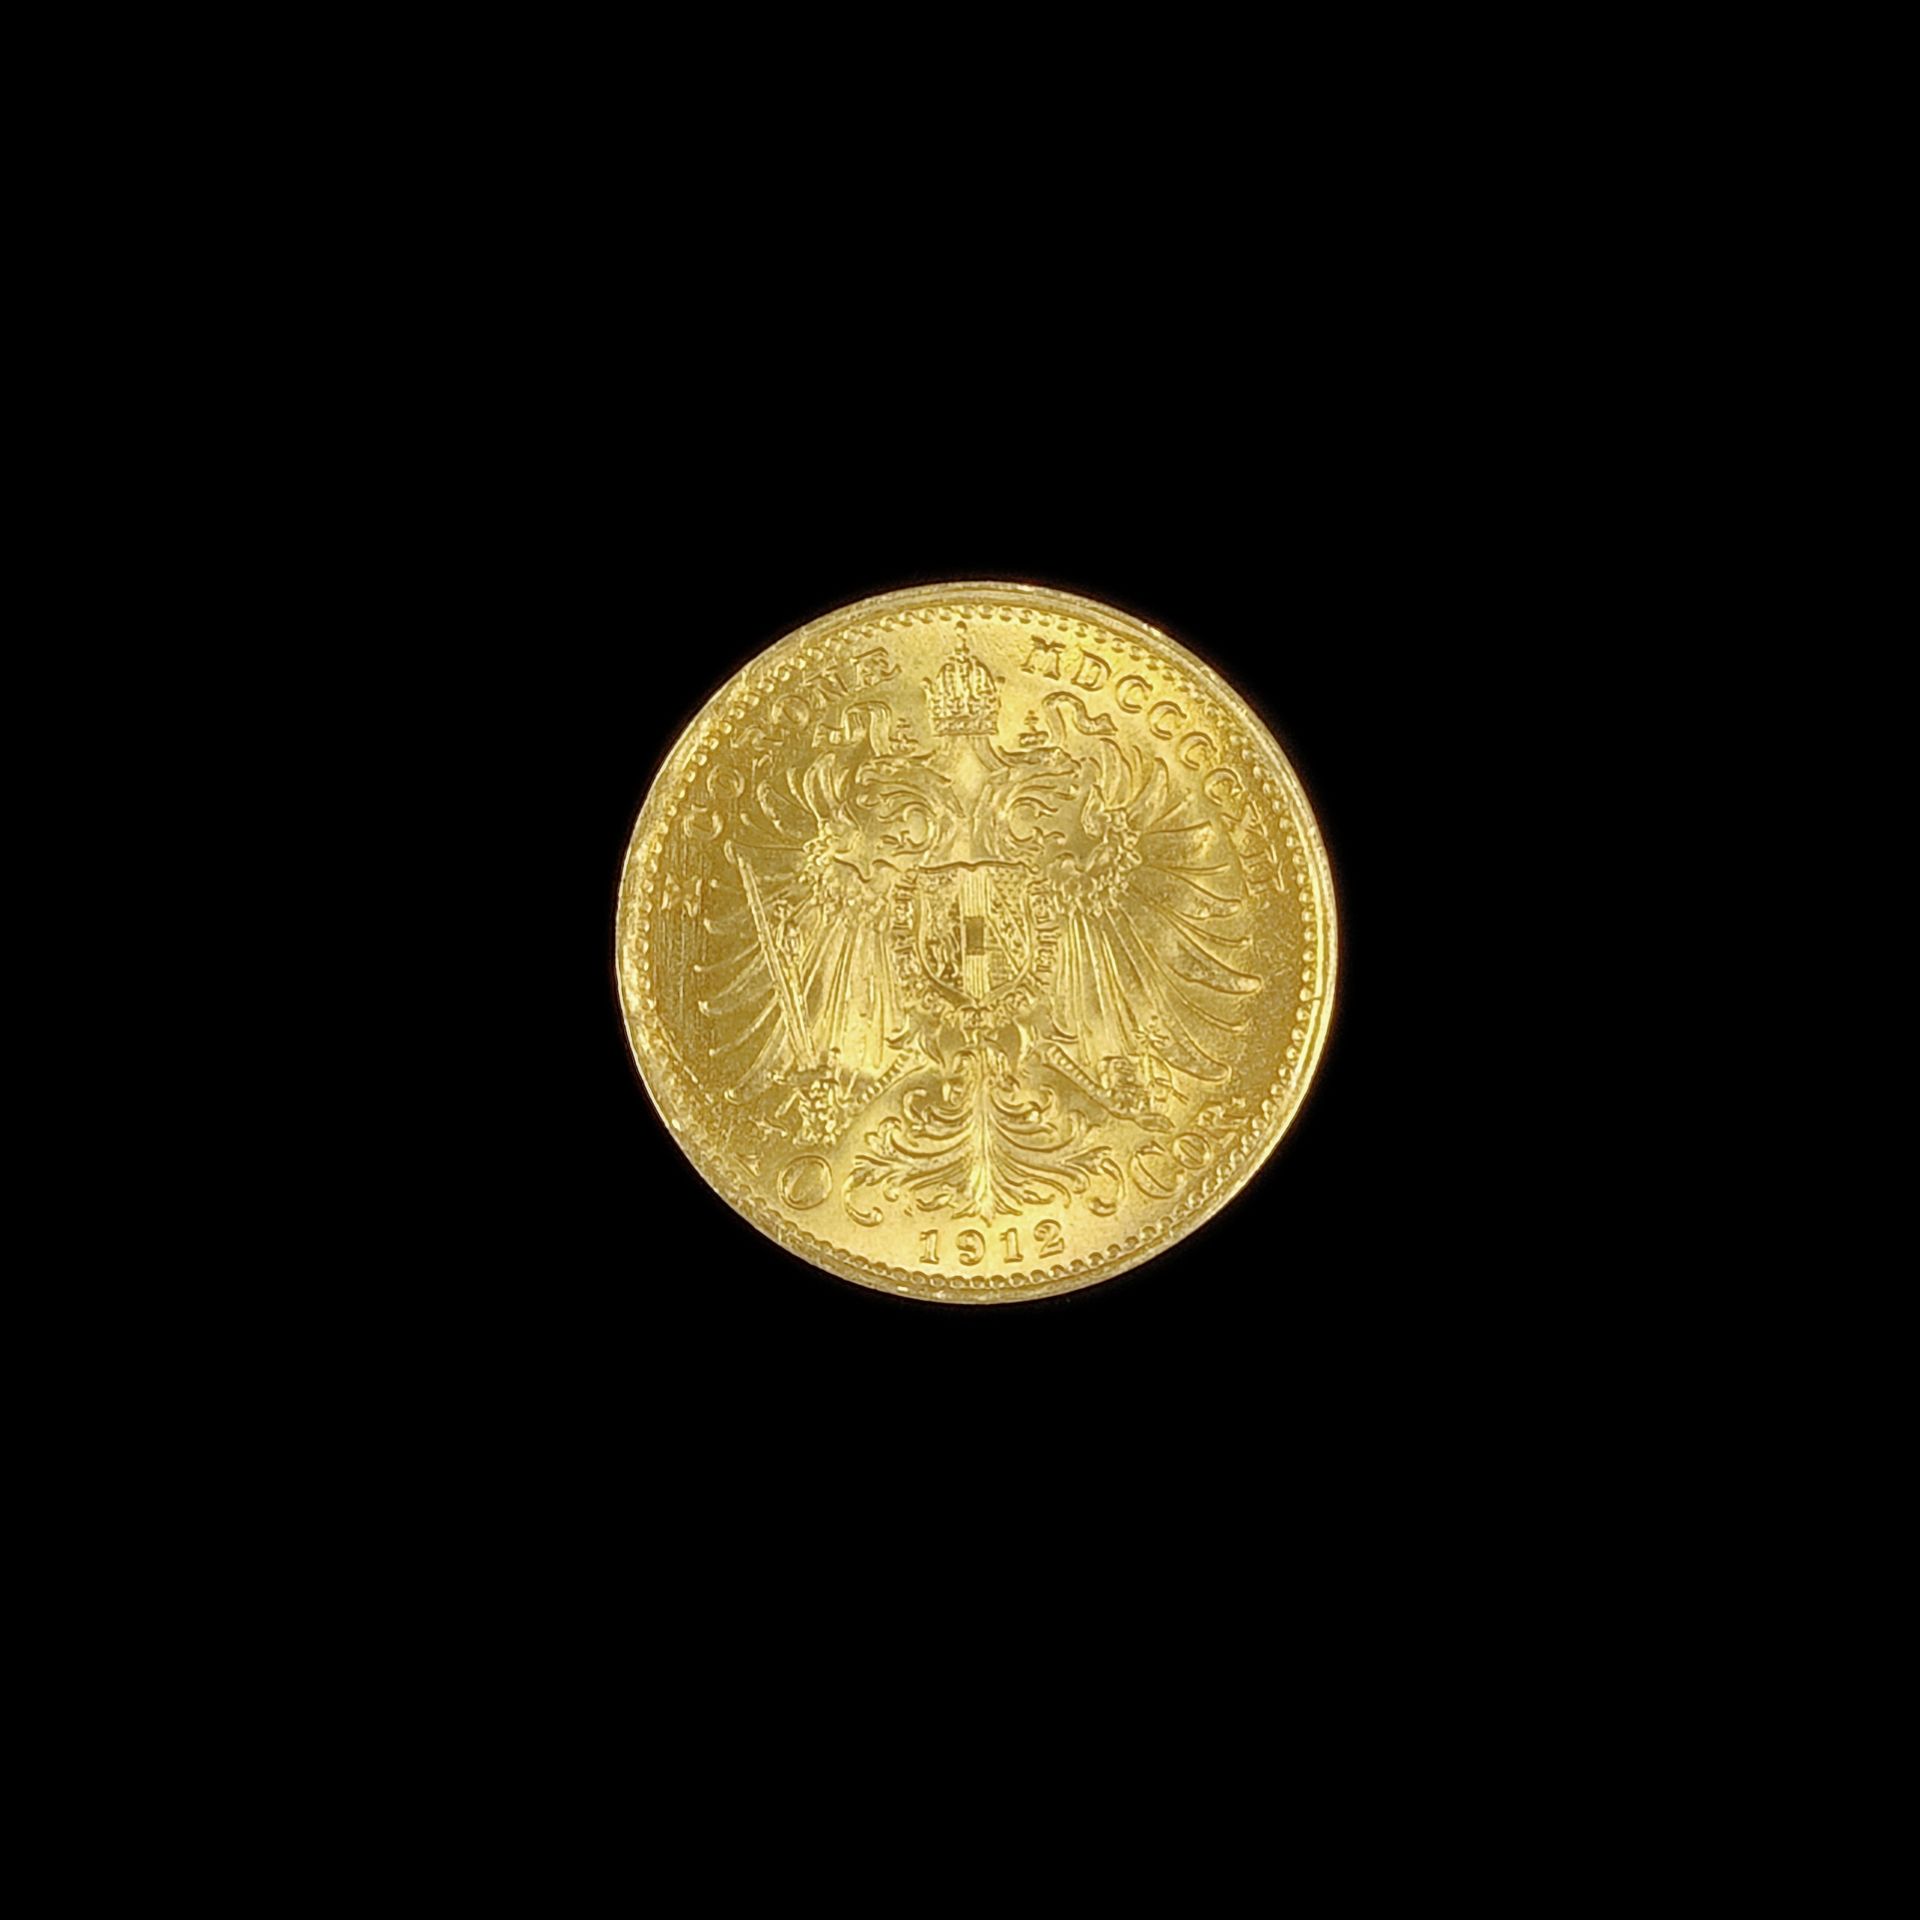 Gold coin, 10 Kronen / crowns, Franz Joseph I, Austria-Hungary 1912, 900 yellow gold, 3.39g, diamet - Image 2 of 2